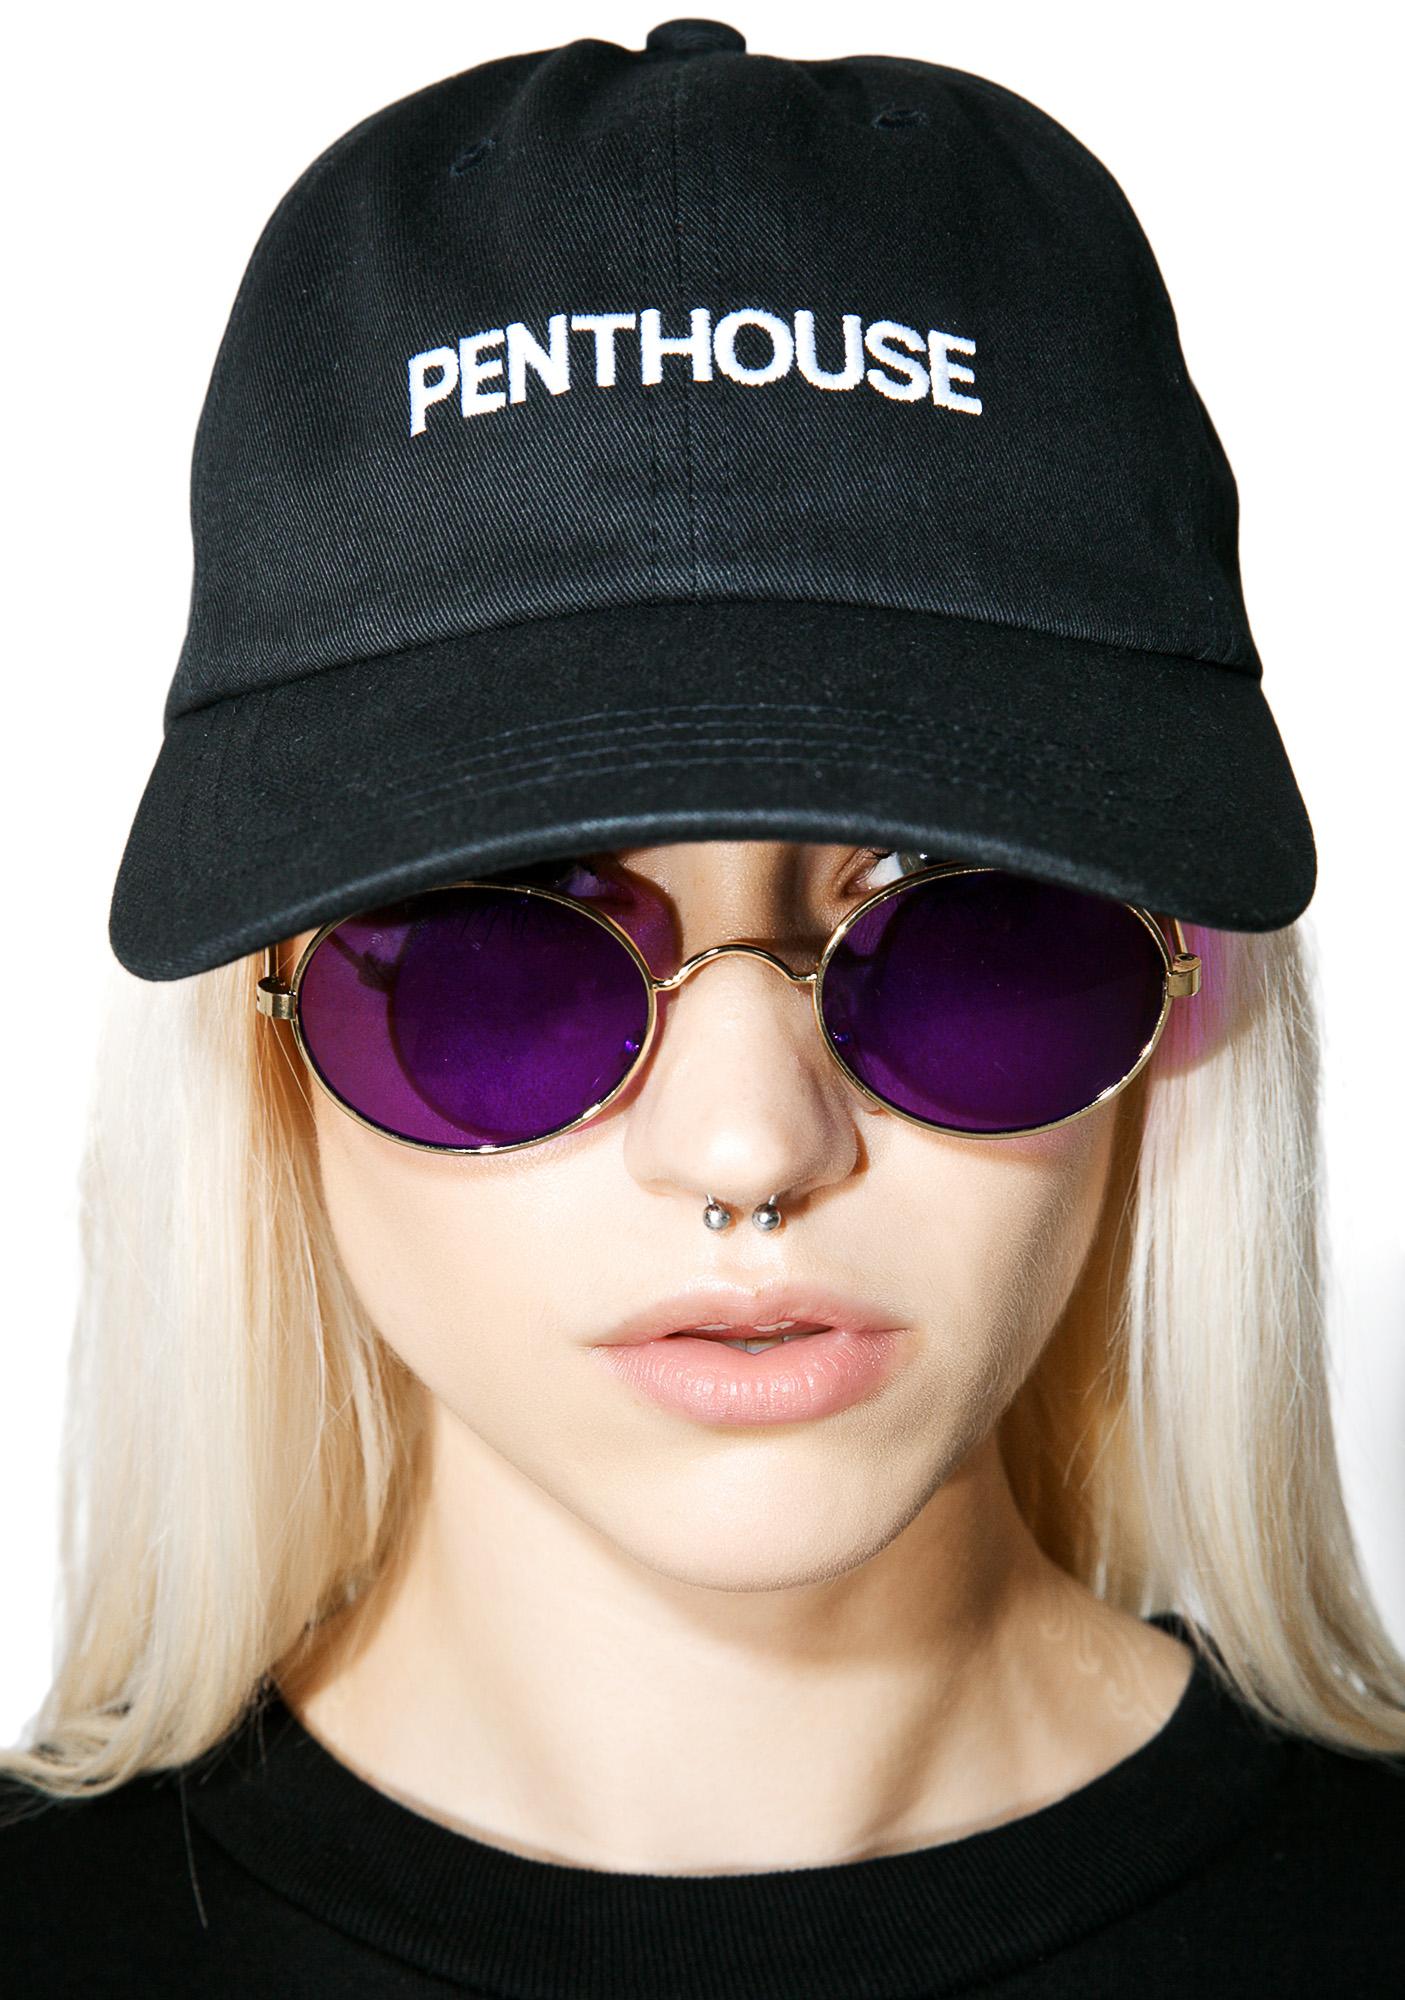 Penthouse Glasses Sex